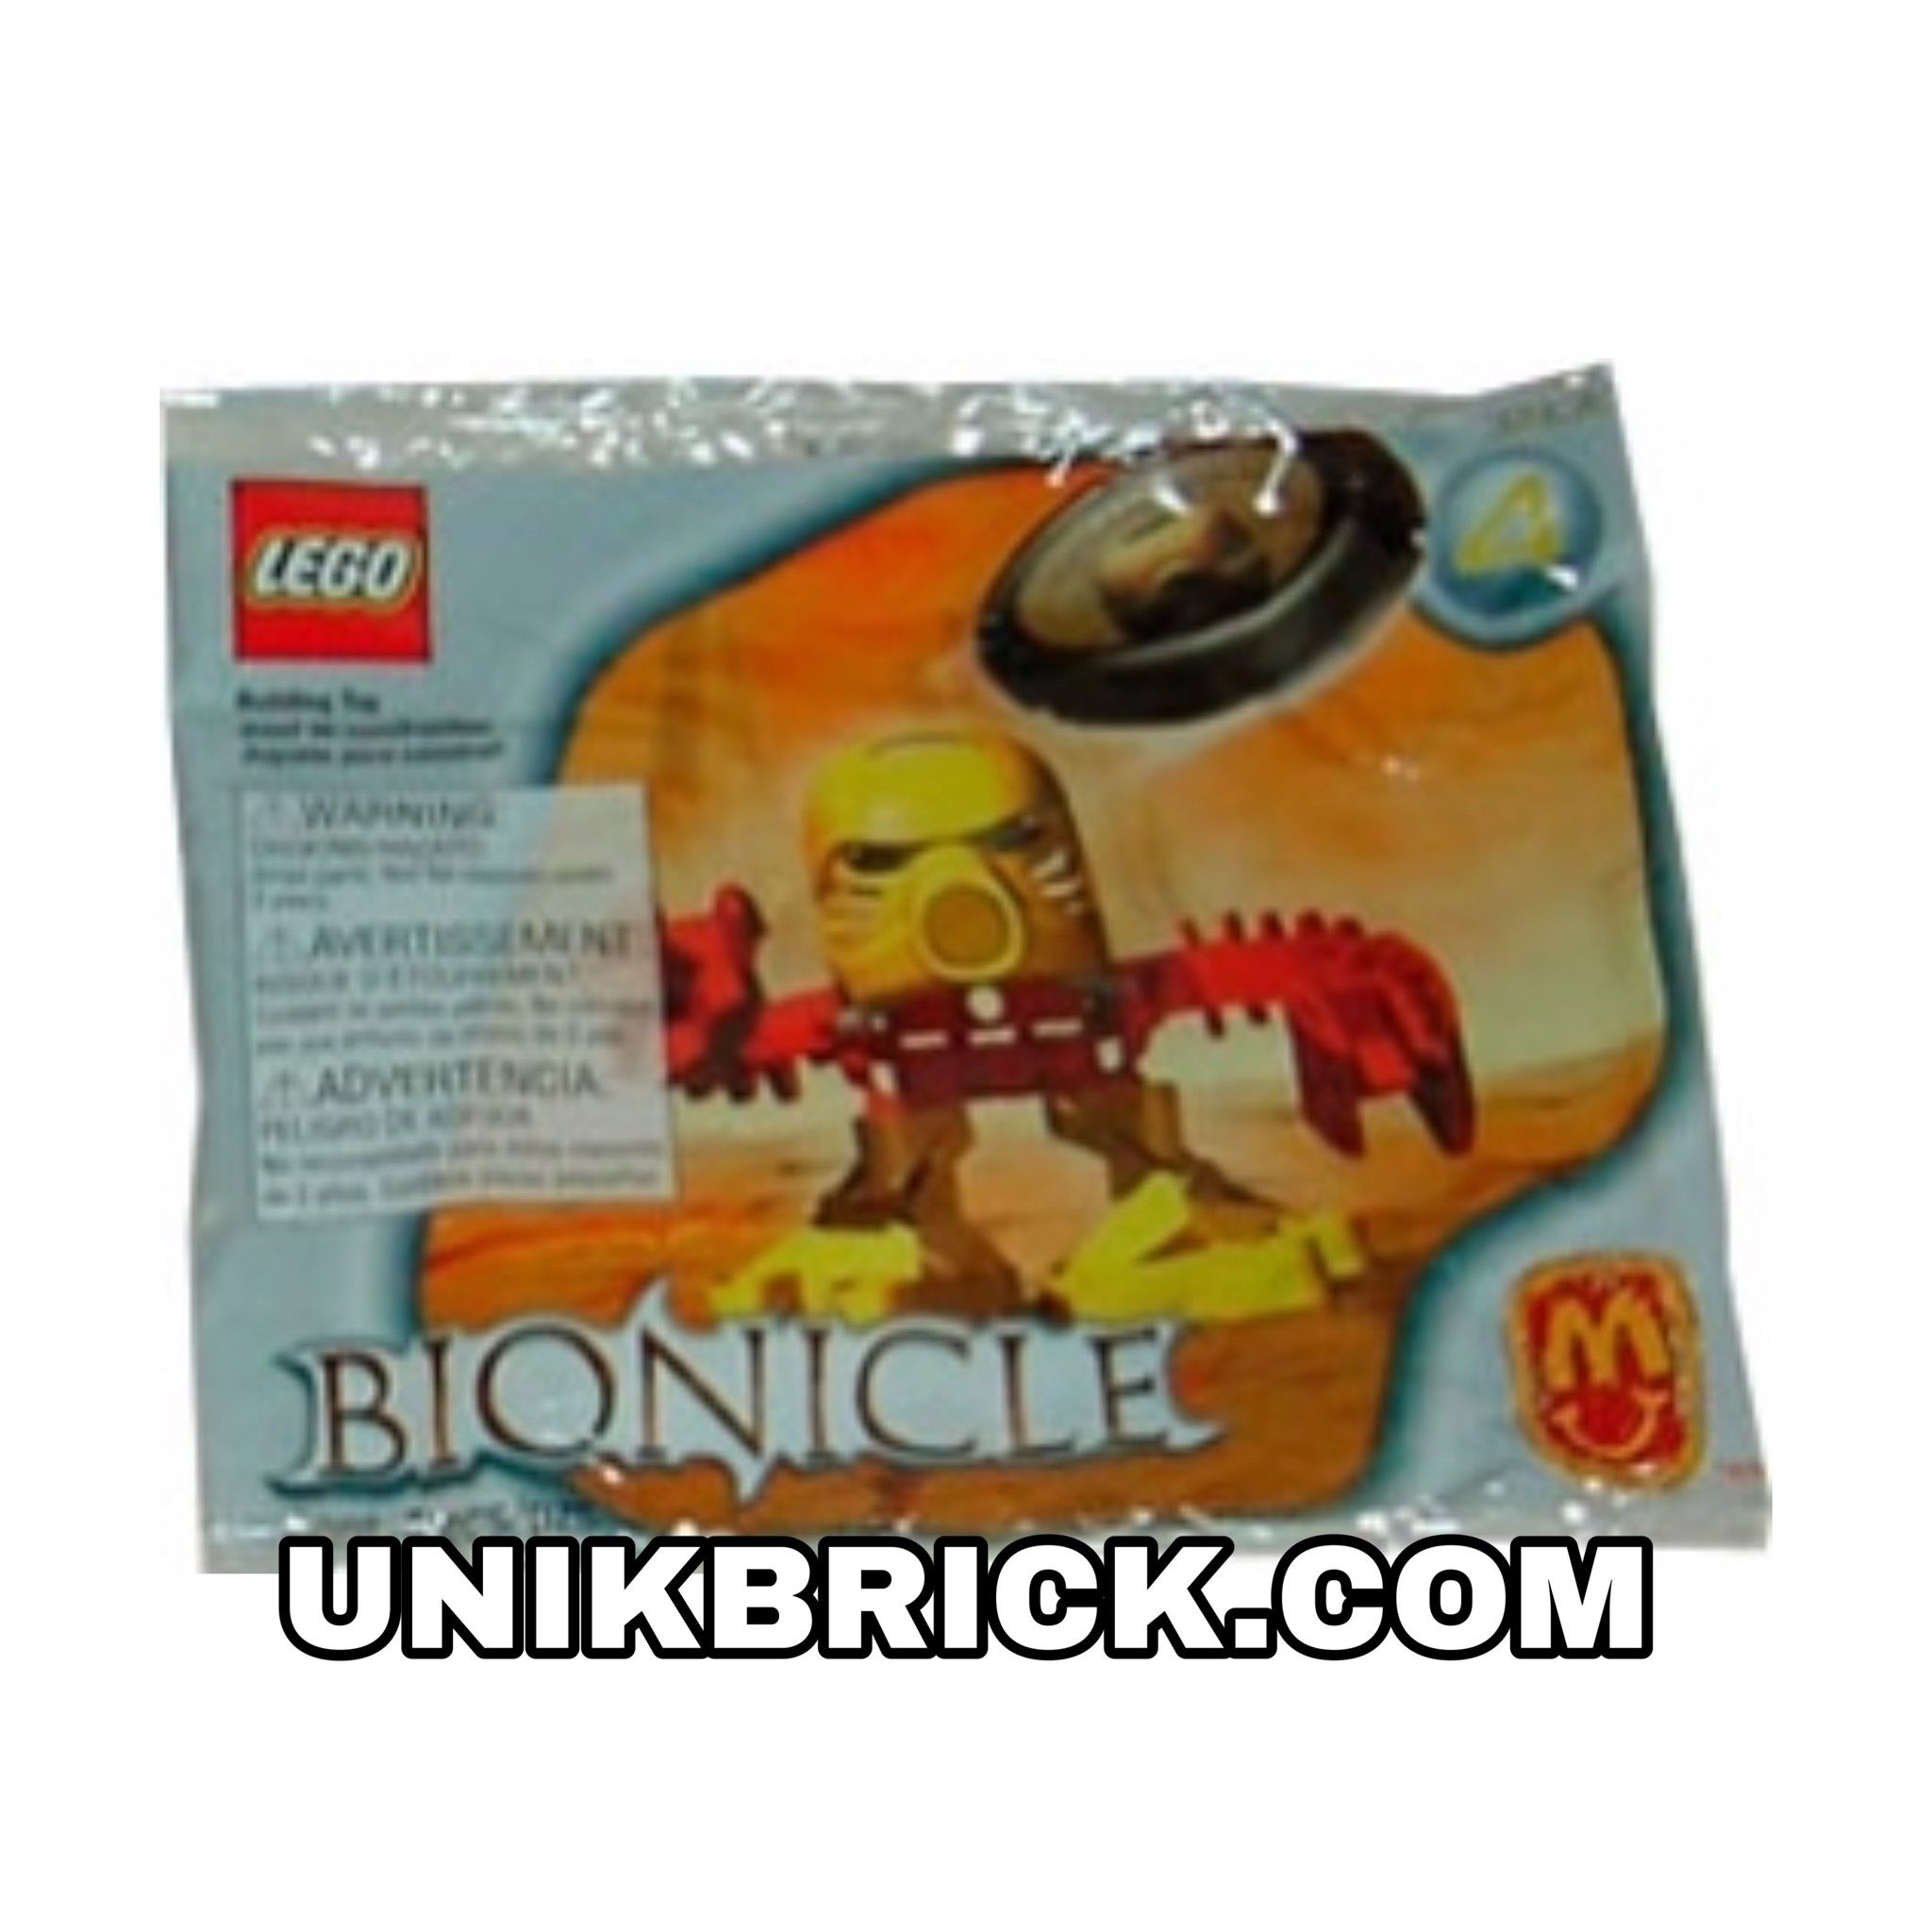 [ORDER ITEMS] LEGO Bionicle 1391 Jala